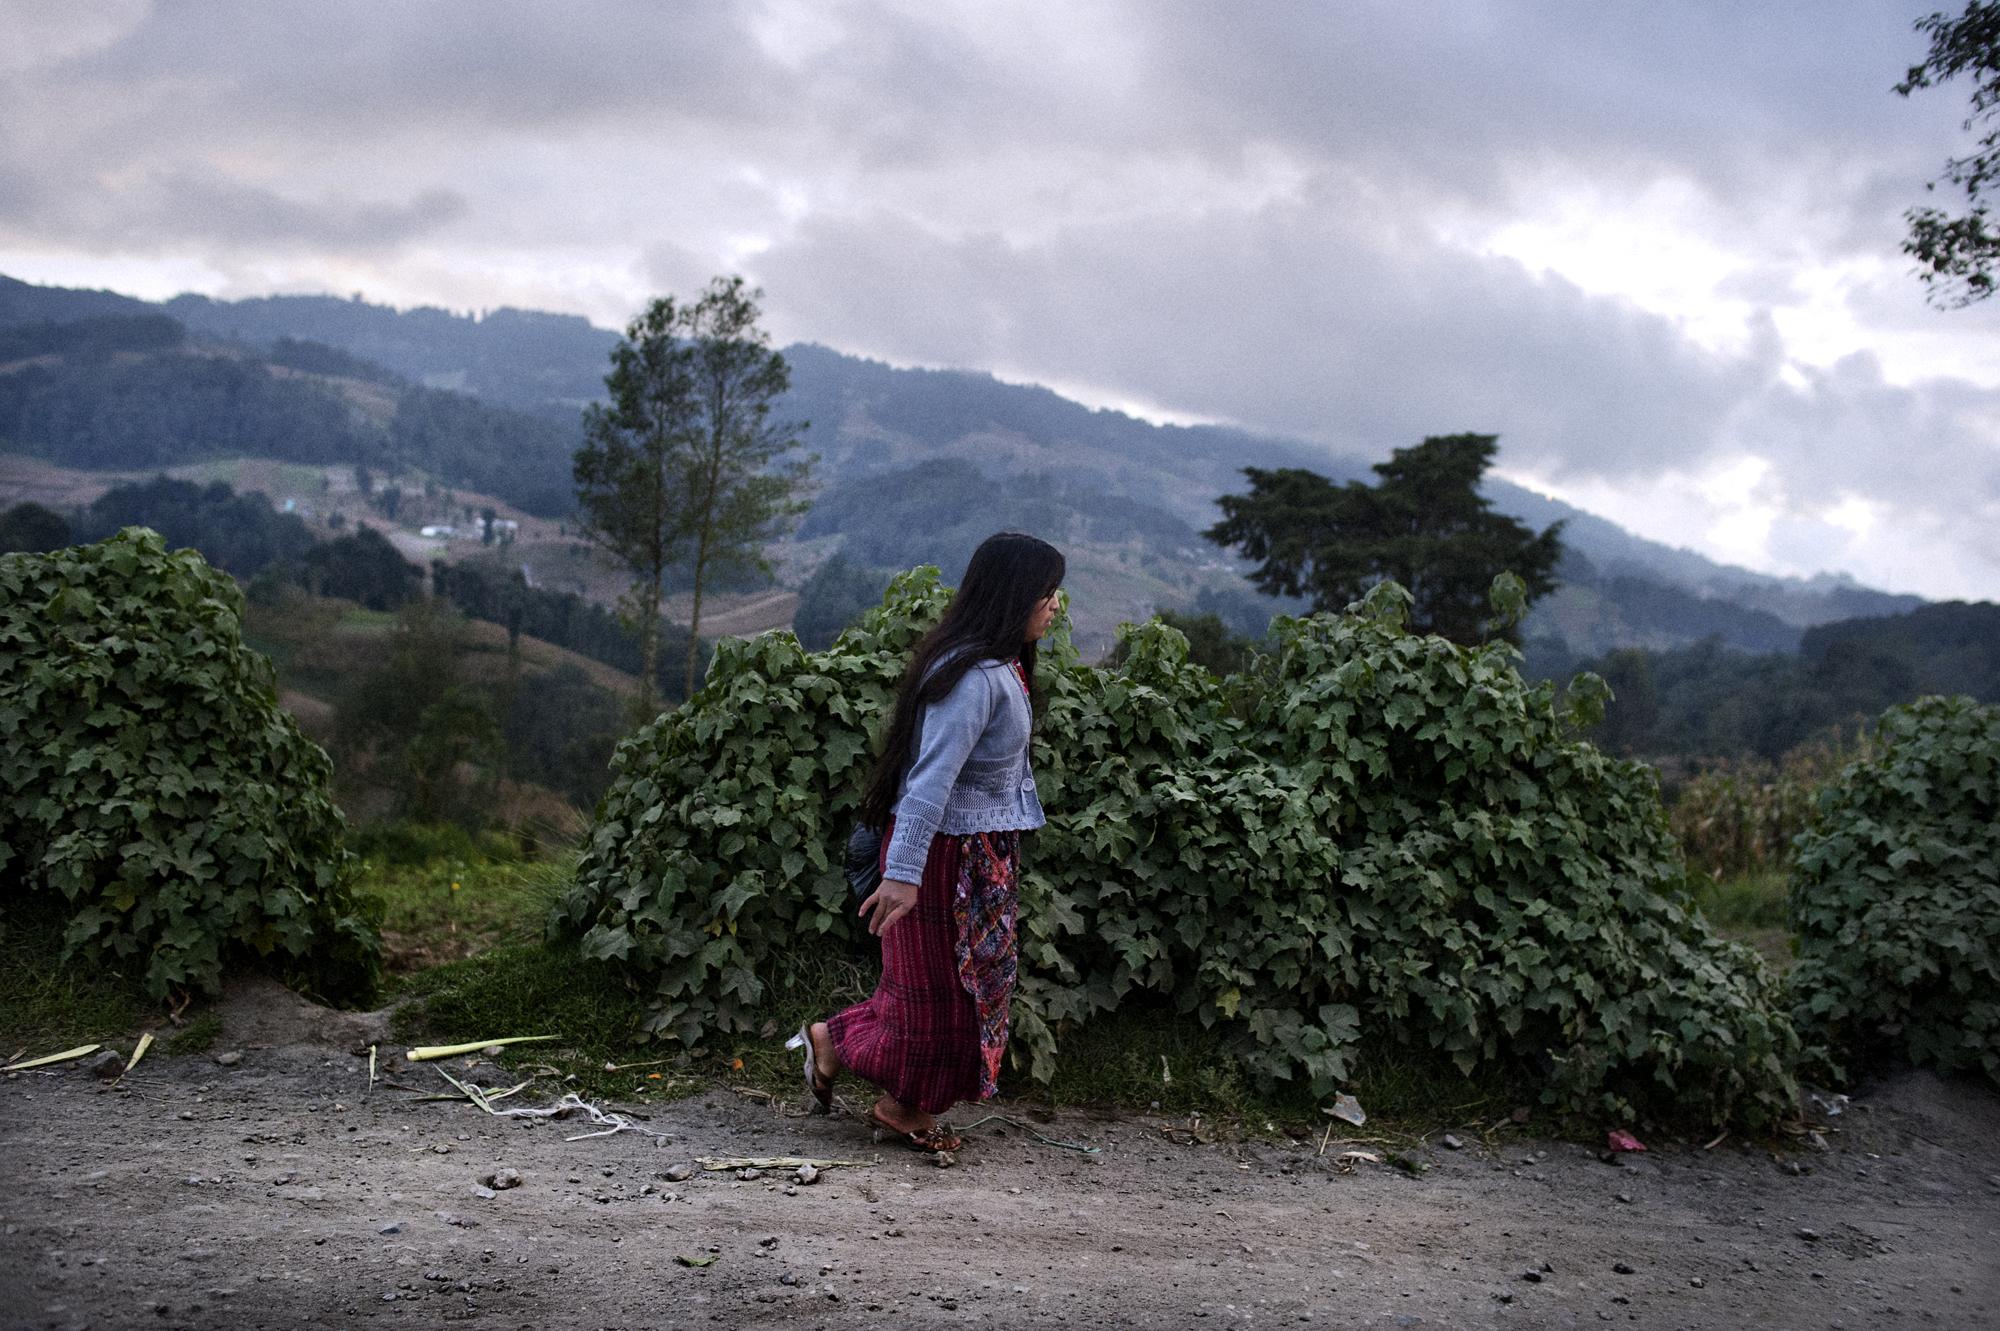 Microcredit / Central America - Quetzaltenango, Guatemala.
October 2010.
A Indigenous...